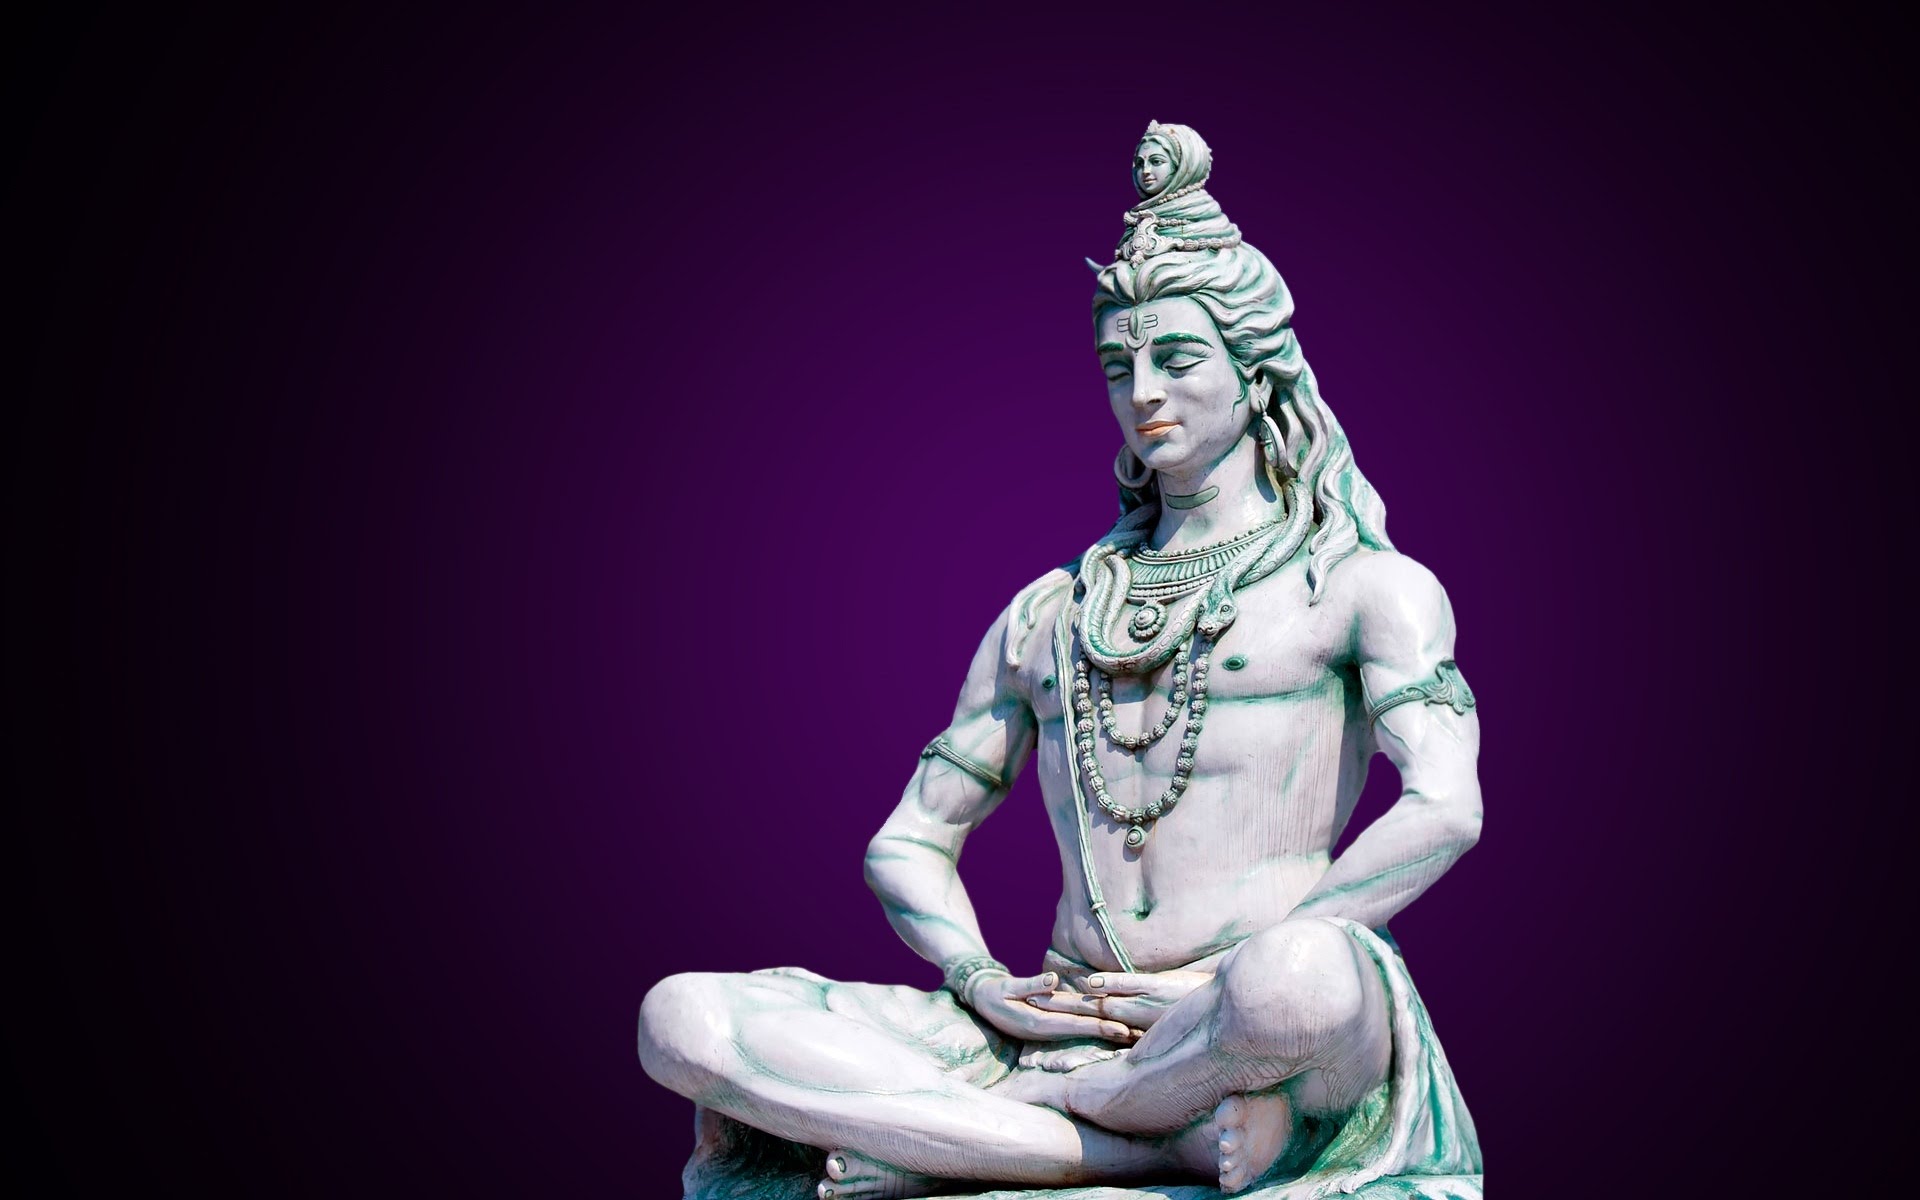 Significance of MahaShivaratri,Significance of Shivaratri,Importance of Lord Shiva,Maha Shivaratri 2017, History of Lord Shiva,special story of MahaShivaratri